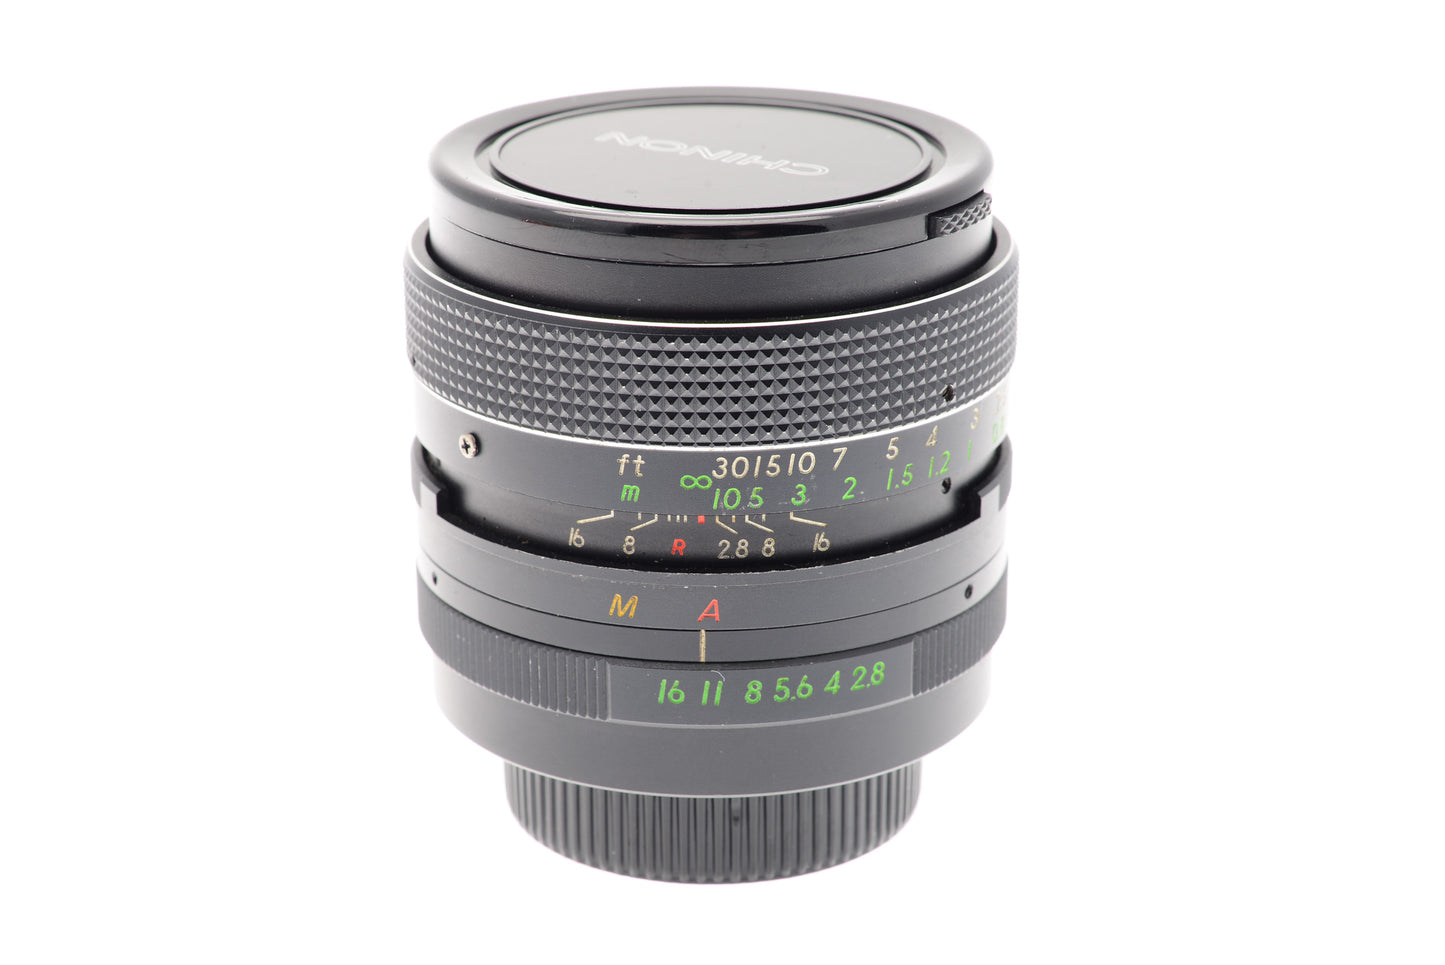 Phokinar 28mm f2.8 MC - Lens